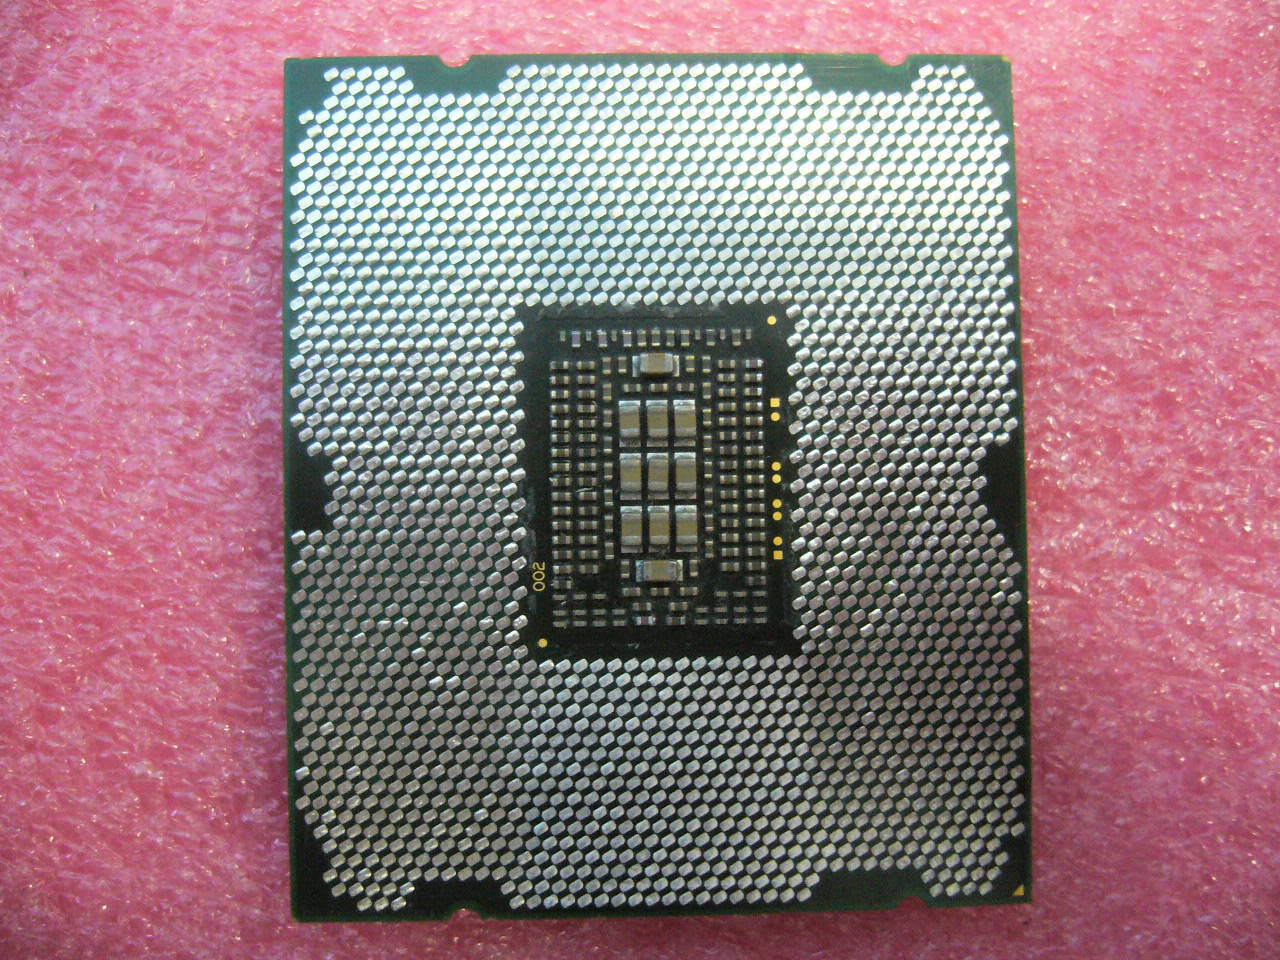 QTY 1x Intel Xeon CPU E5-2648L 8-Cores 1.8Ghz LGA2011 TDP 70W SR0LX - Click Image to Close